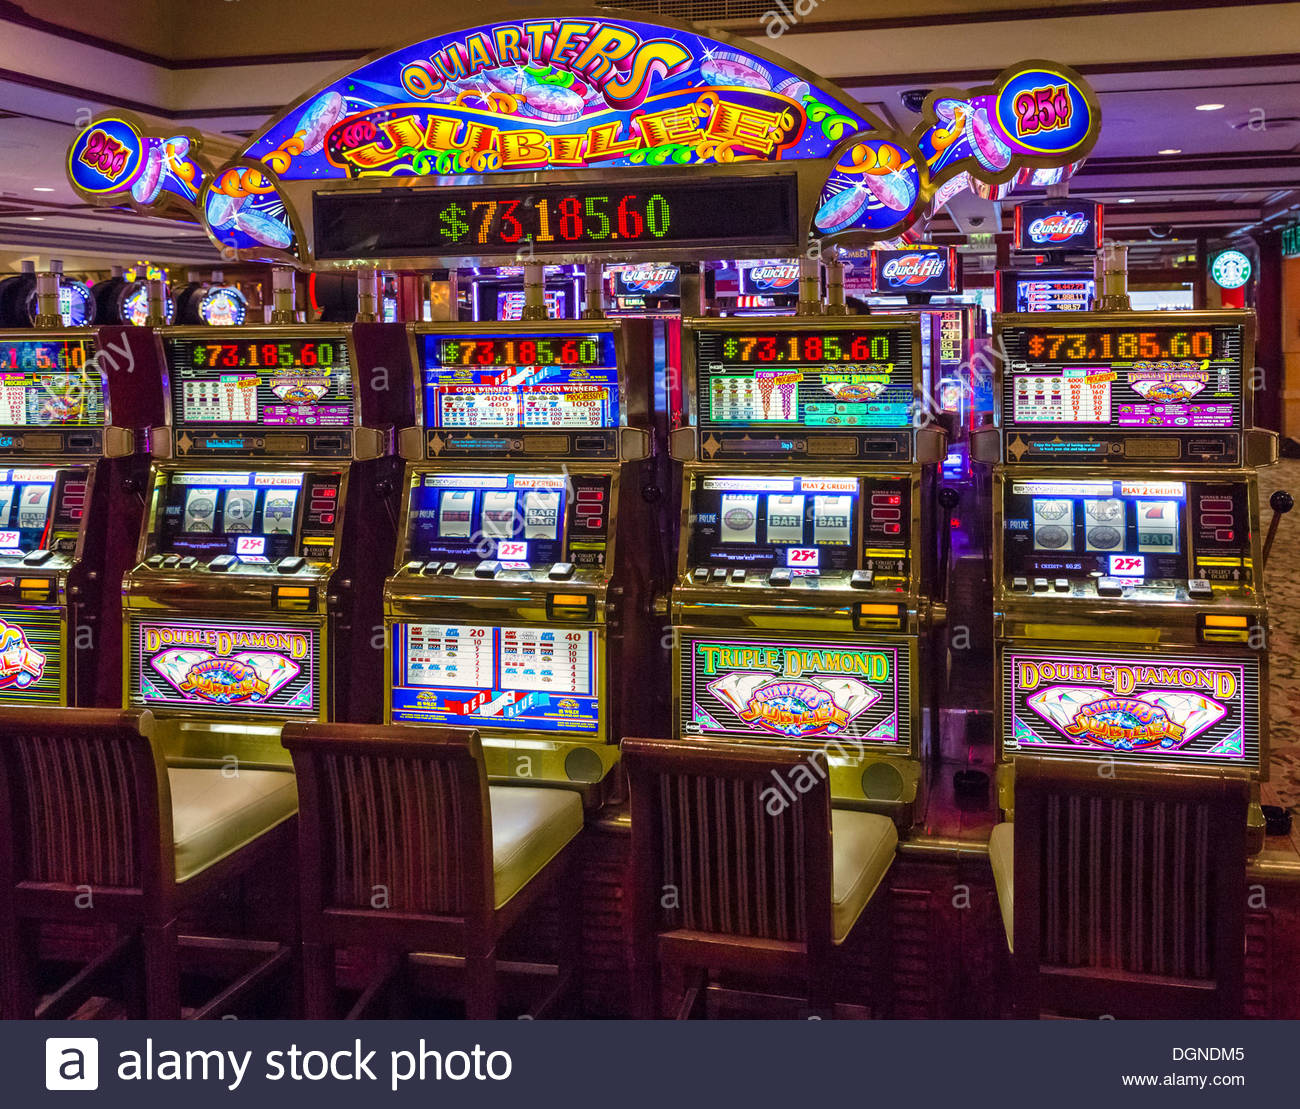 888 casino online roulette